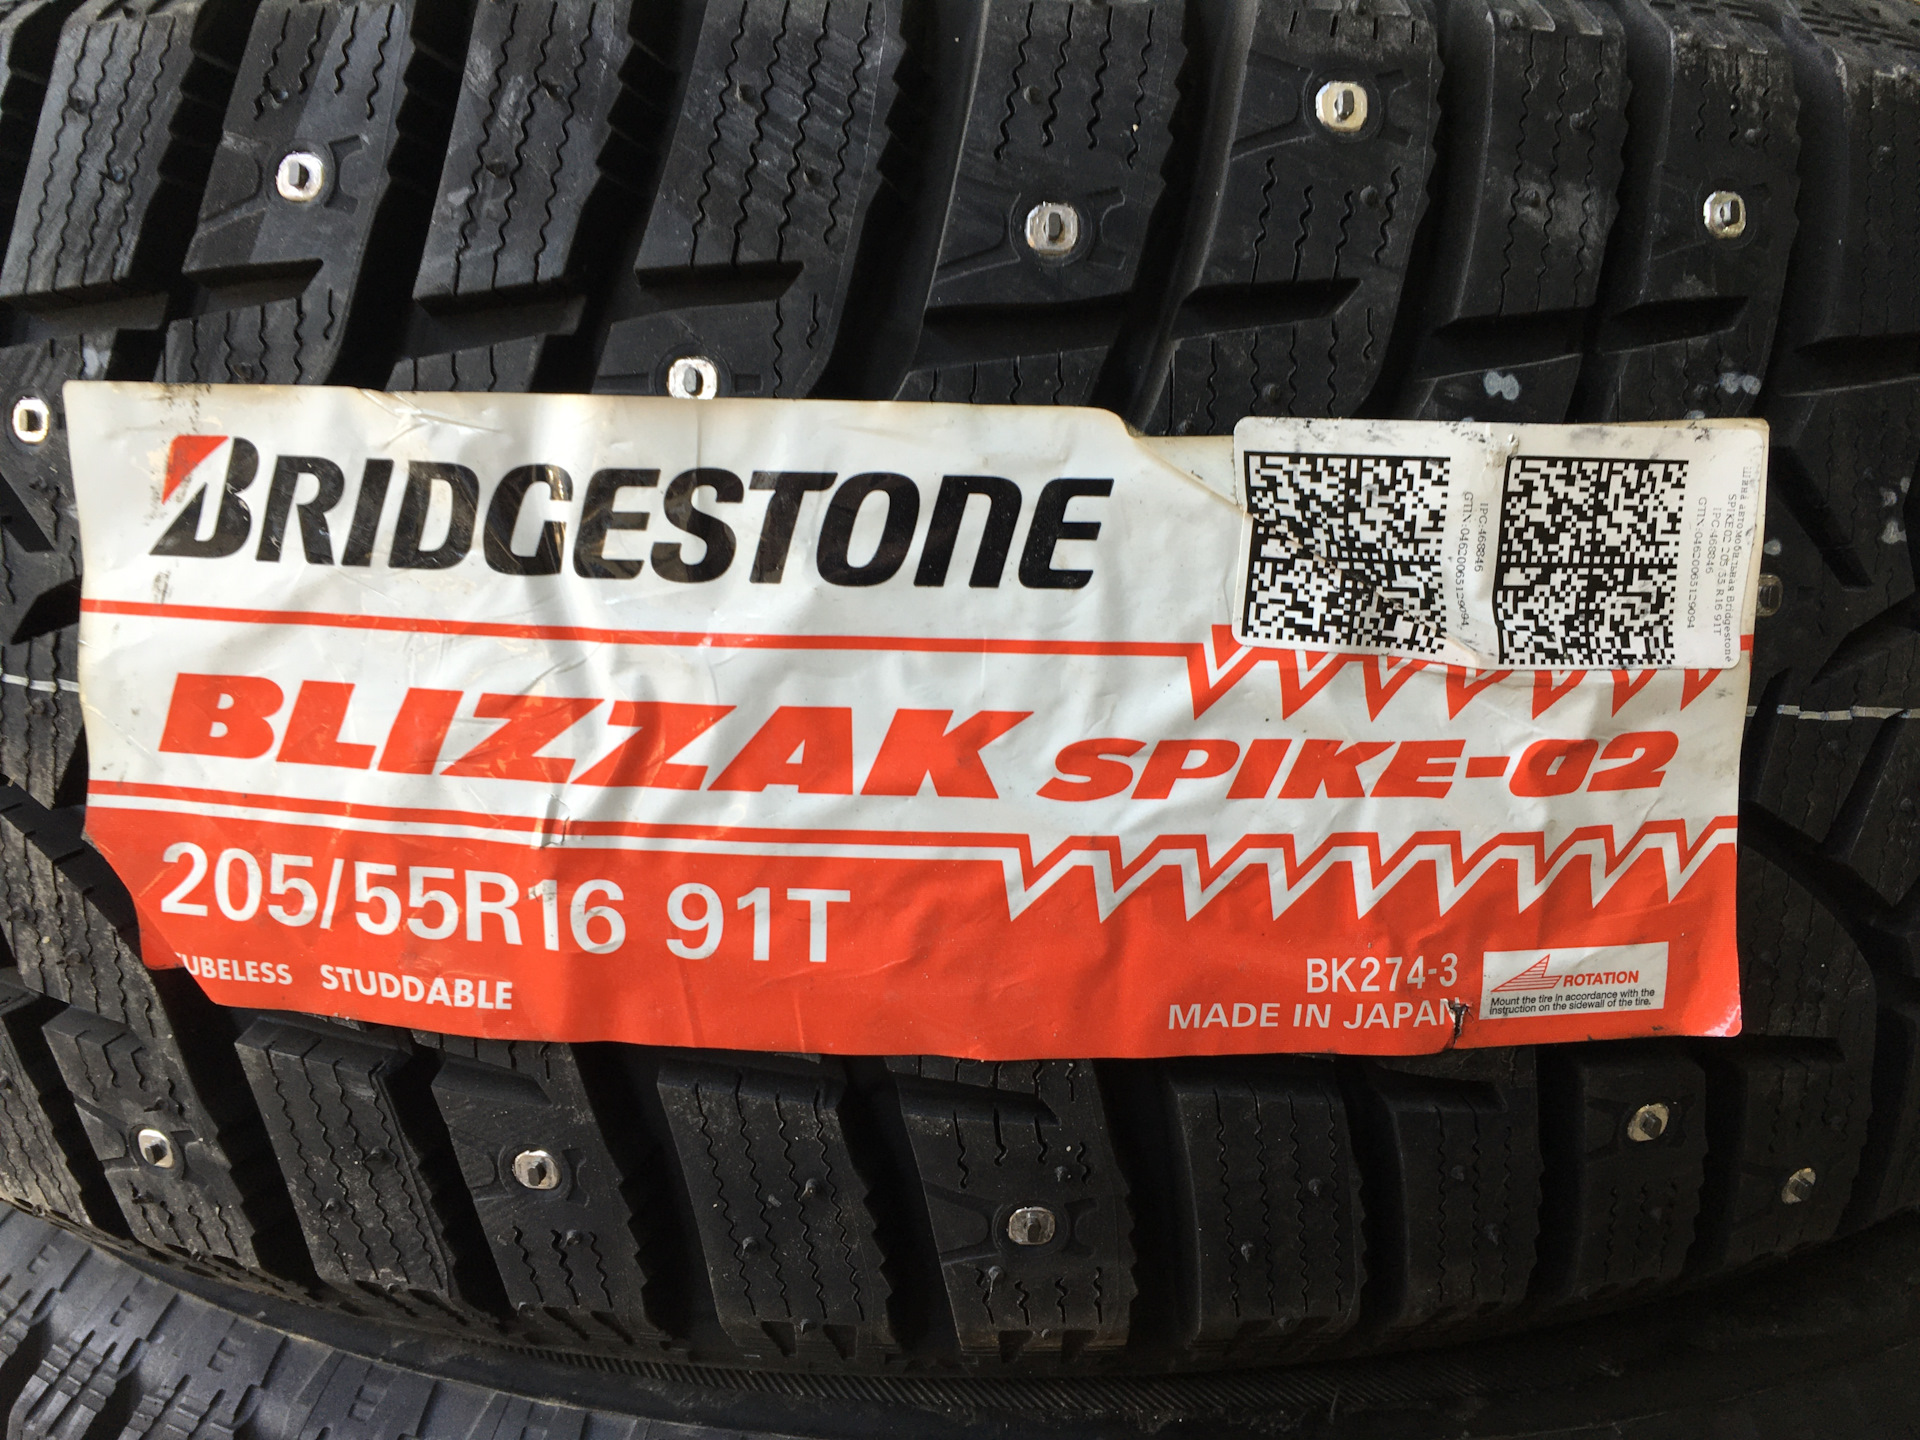 Bridgestone blizzak spike 02 205 55 r16. Bridgestone Blizzak Spike-02. Шина Bridgestone Blizzak Spike-02. Bridgestone Blizzak Spike-02 91t. Бриджстоун Спайк 02.